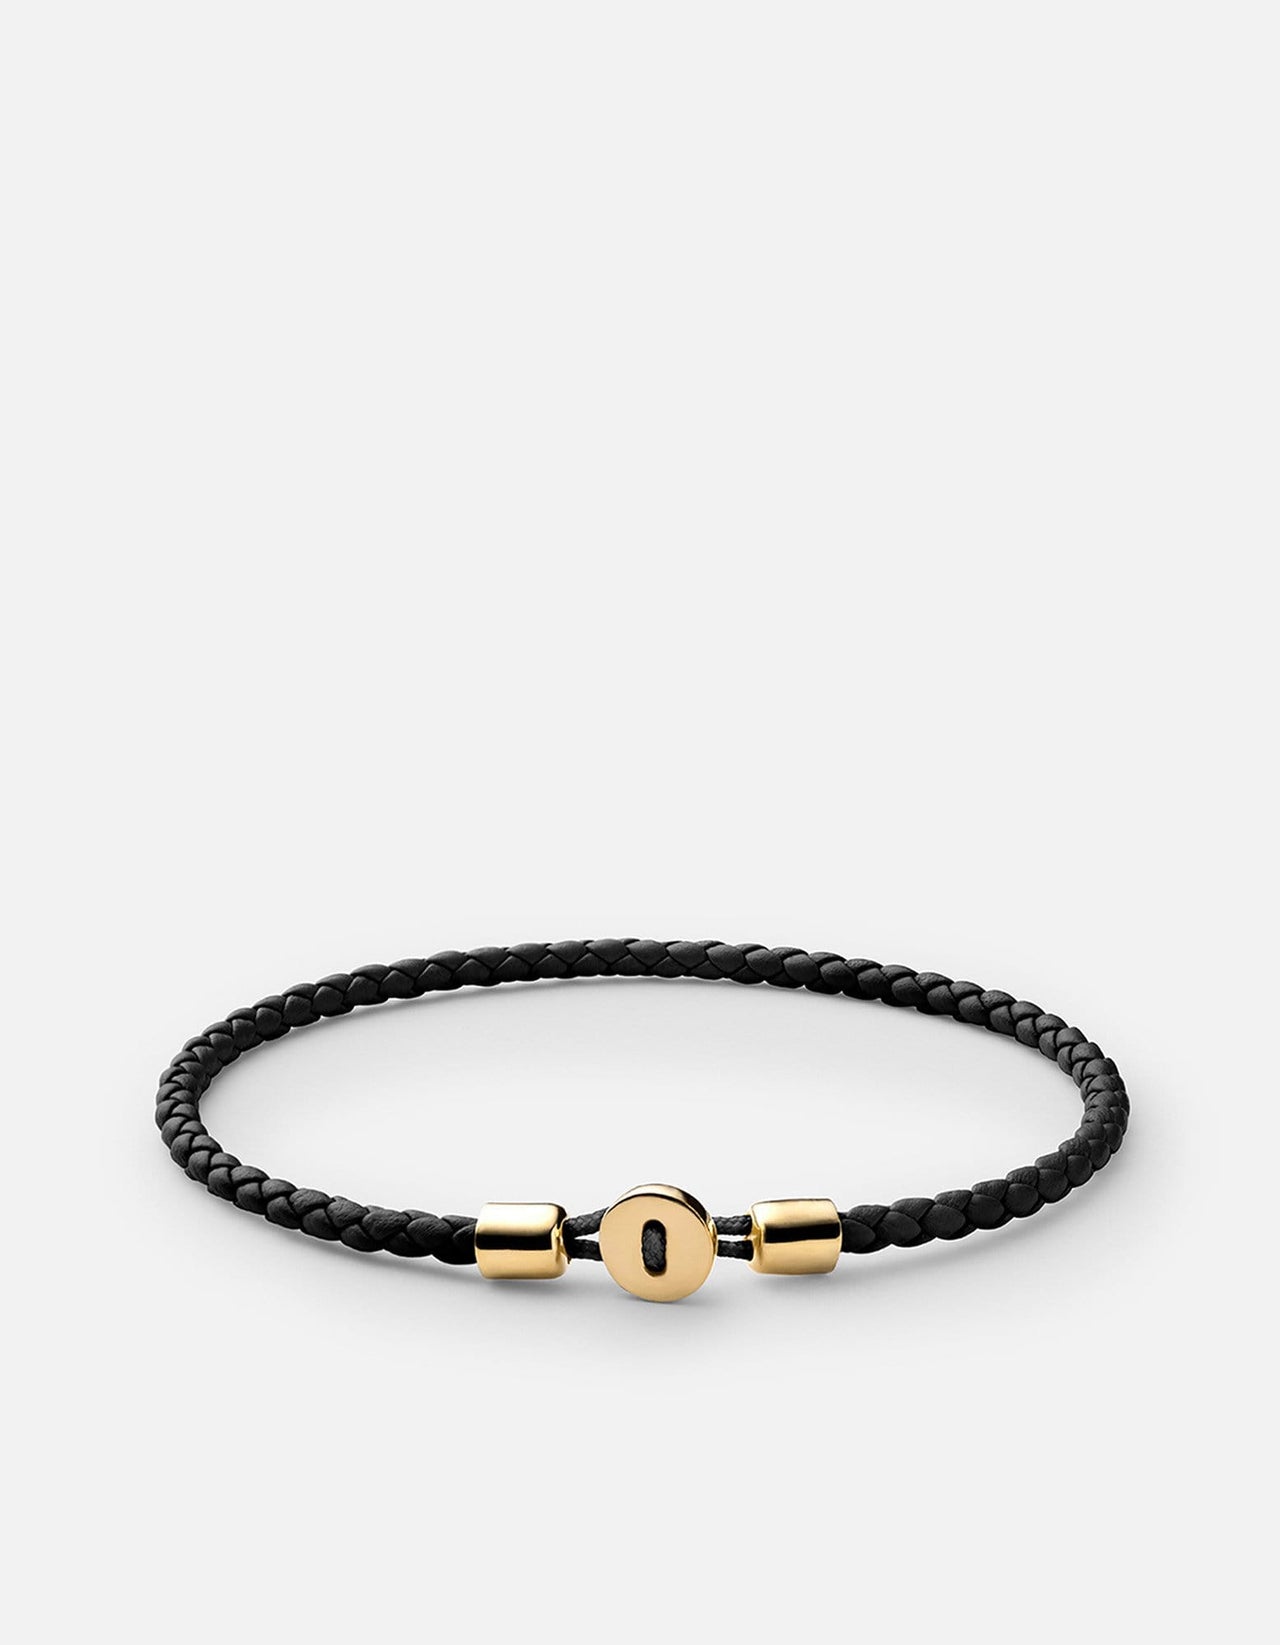 Amazing Italian Braided Black Leather Mens Bracelet Hand Made #fashion # Bracelet #gifts #m… | Кожаные браслеты, Плетеные кожаные браслеты, Мужские  кожаные браслеты